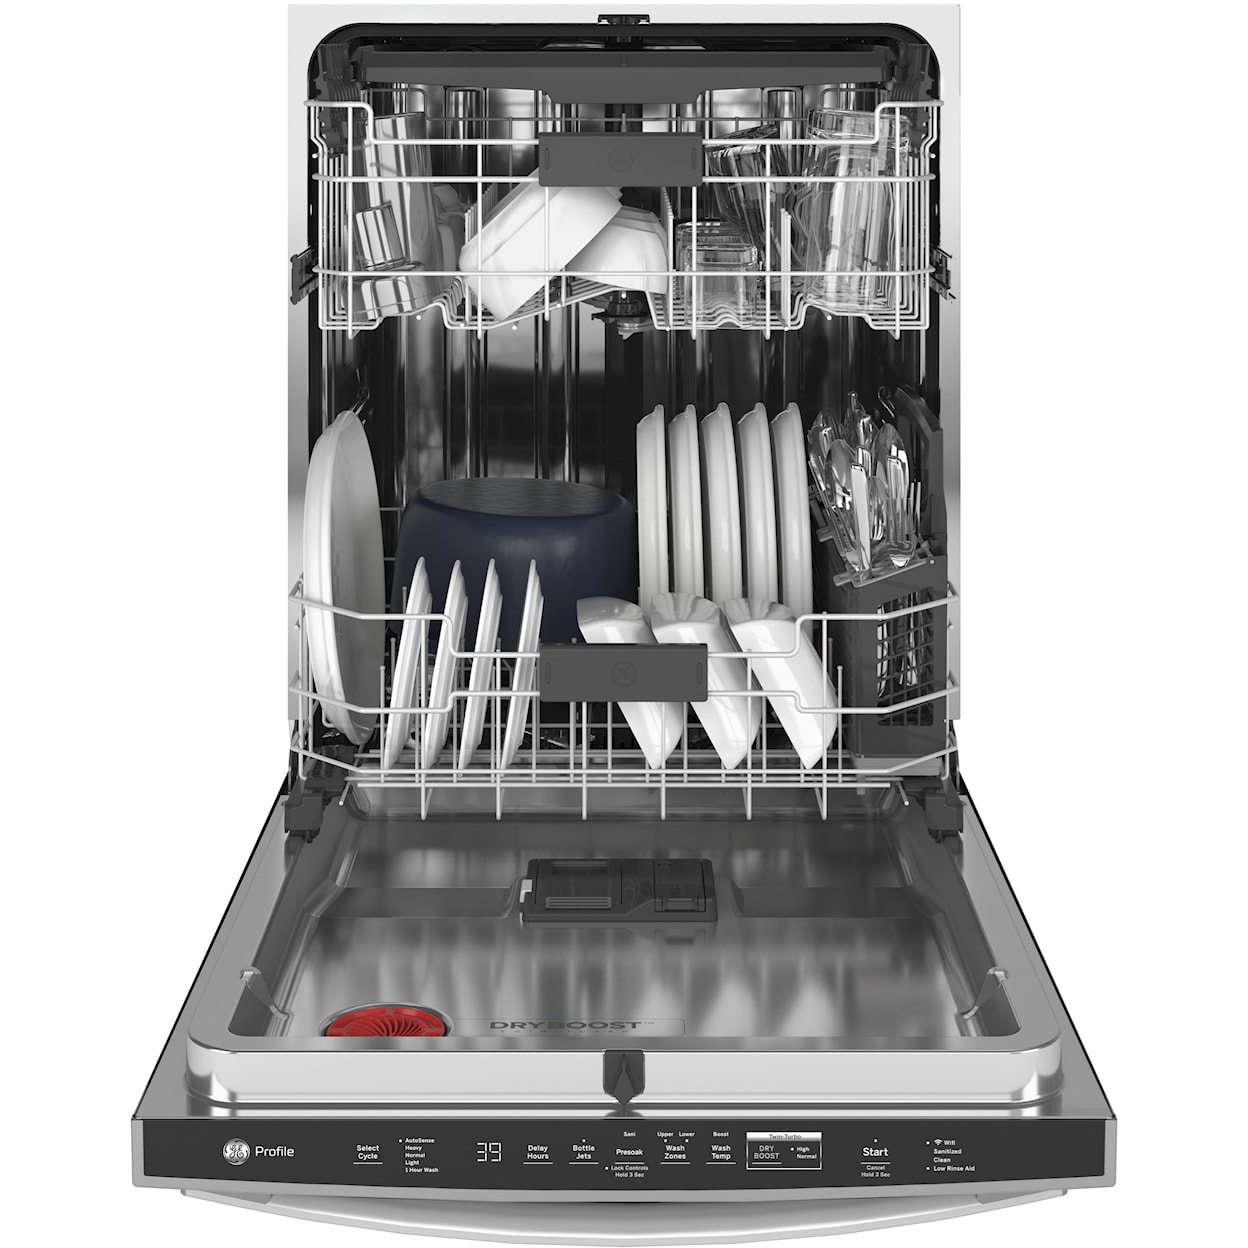 GE Appliances GE Profile Dishwashers GE Profile™ Dishwasher with Hidden Controls